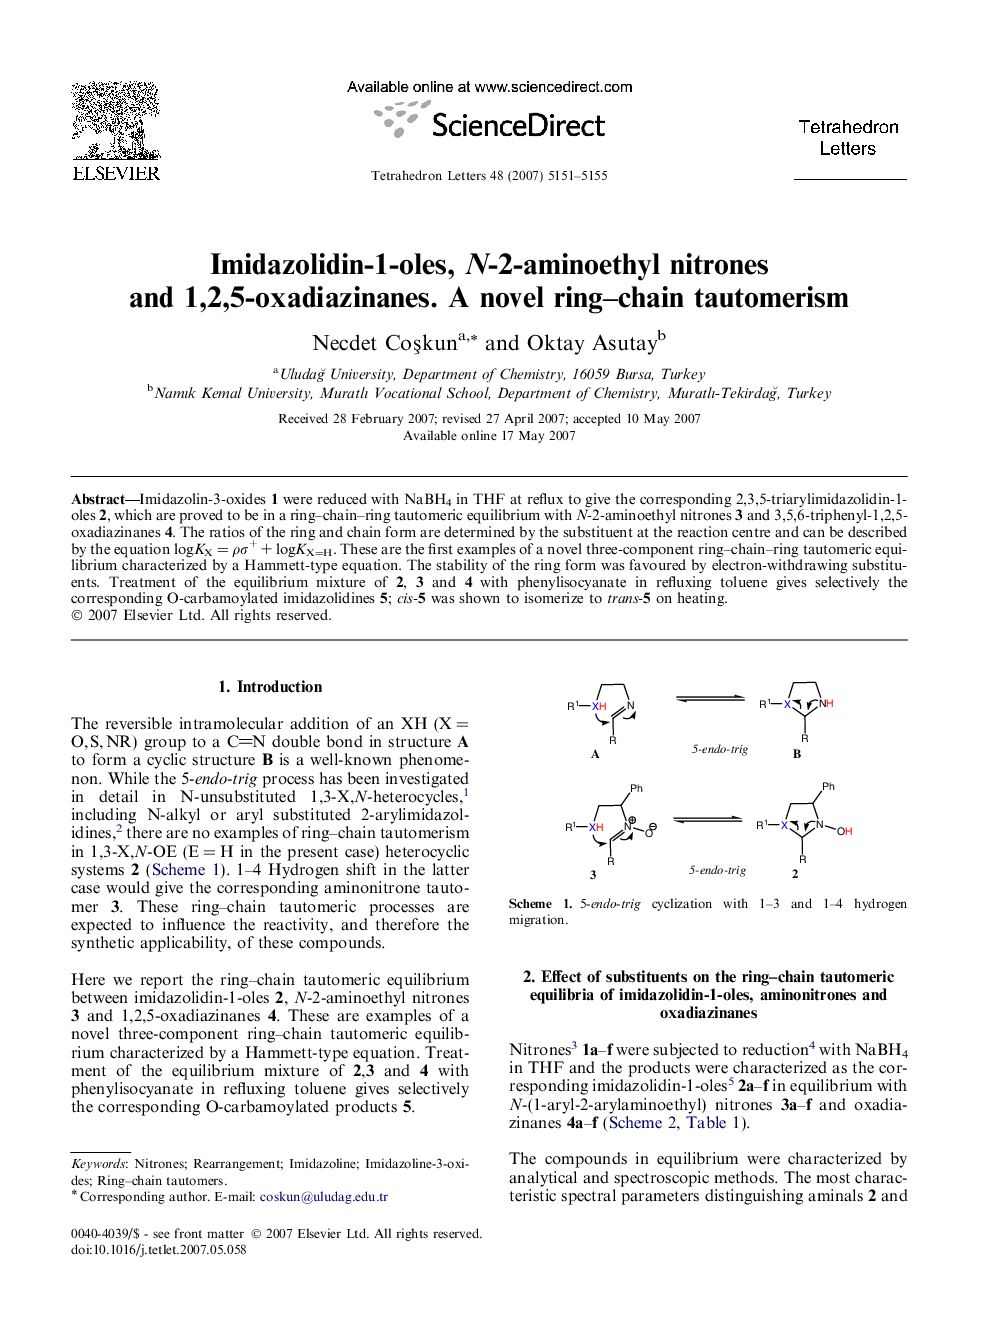 Imidazolidin-1-oles, N-2-aminoethyl nitrones and 1,2,5-oxadiazinanes. A novel ring-chain tautomerism